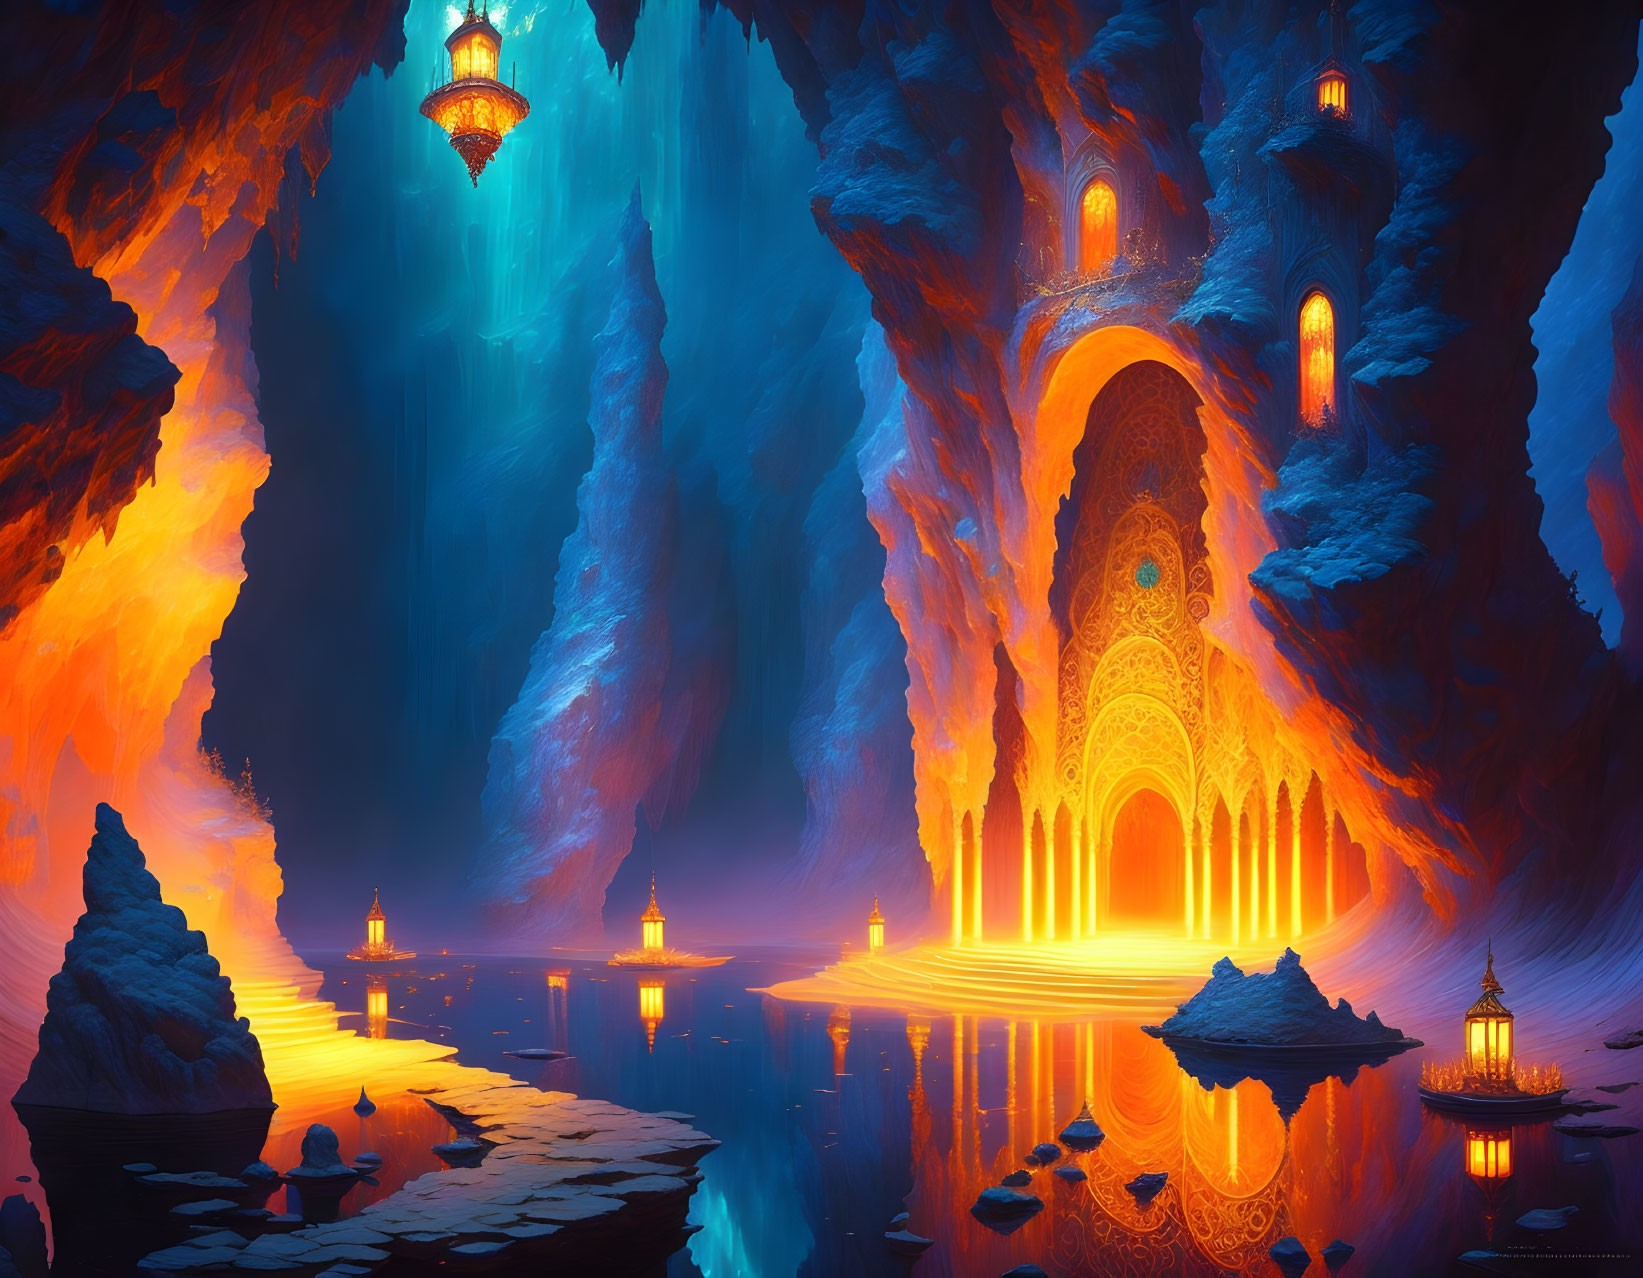 The Alchemist’s Grotto